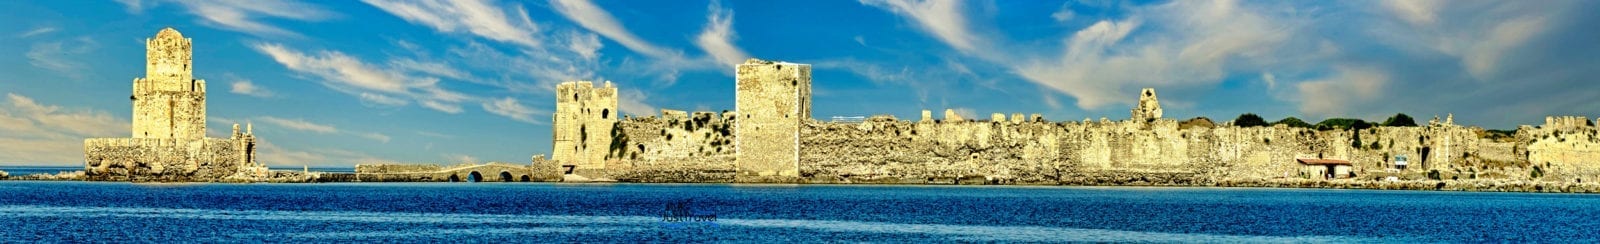 Die Festung von Methoni auf dem Peloponnes